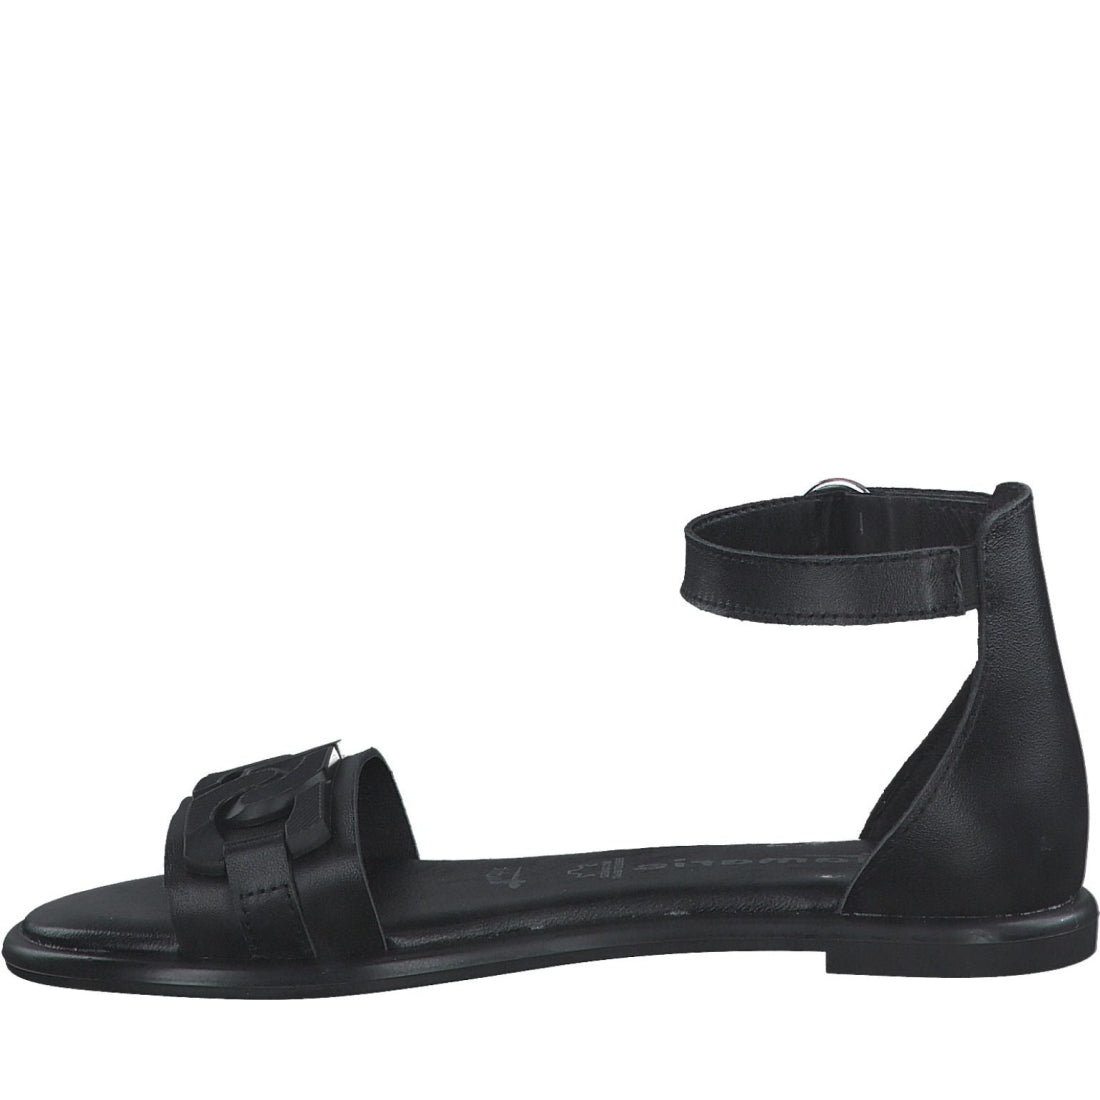 Tamaris womens black leather casual open sandals | Vilbury London